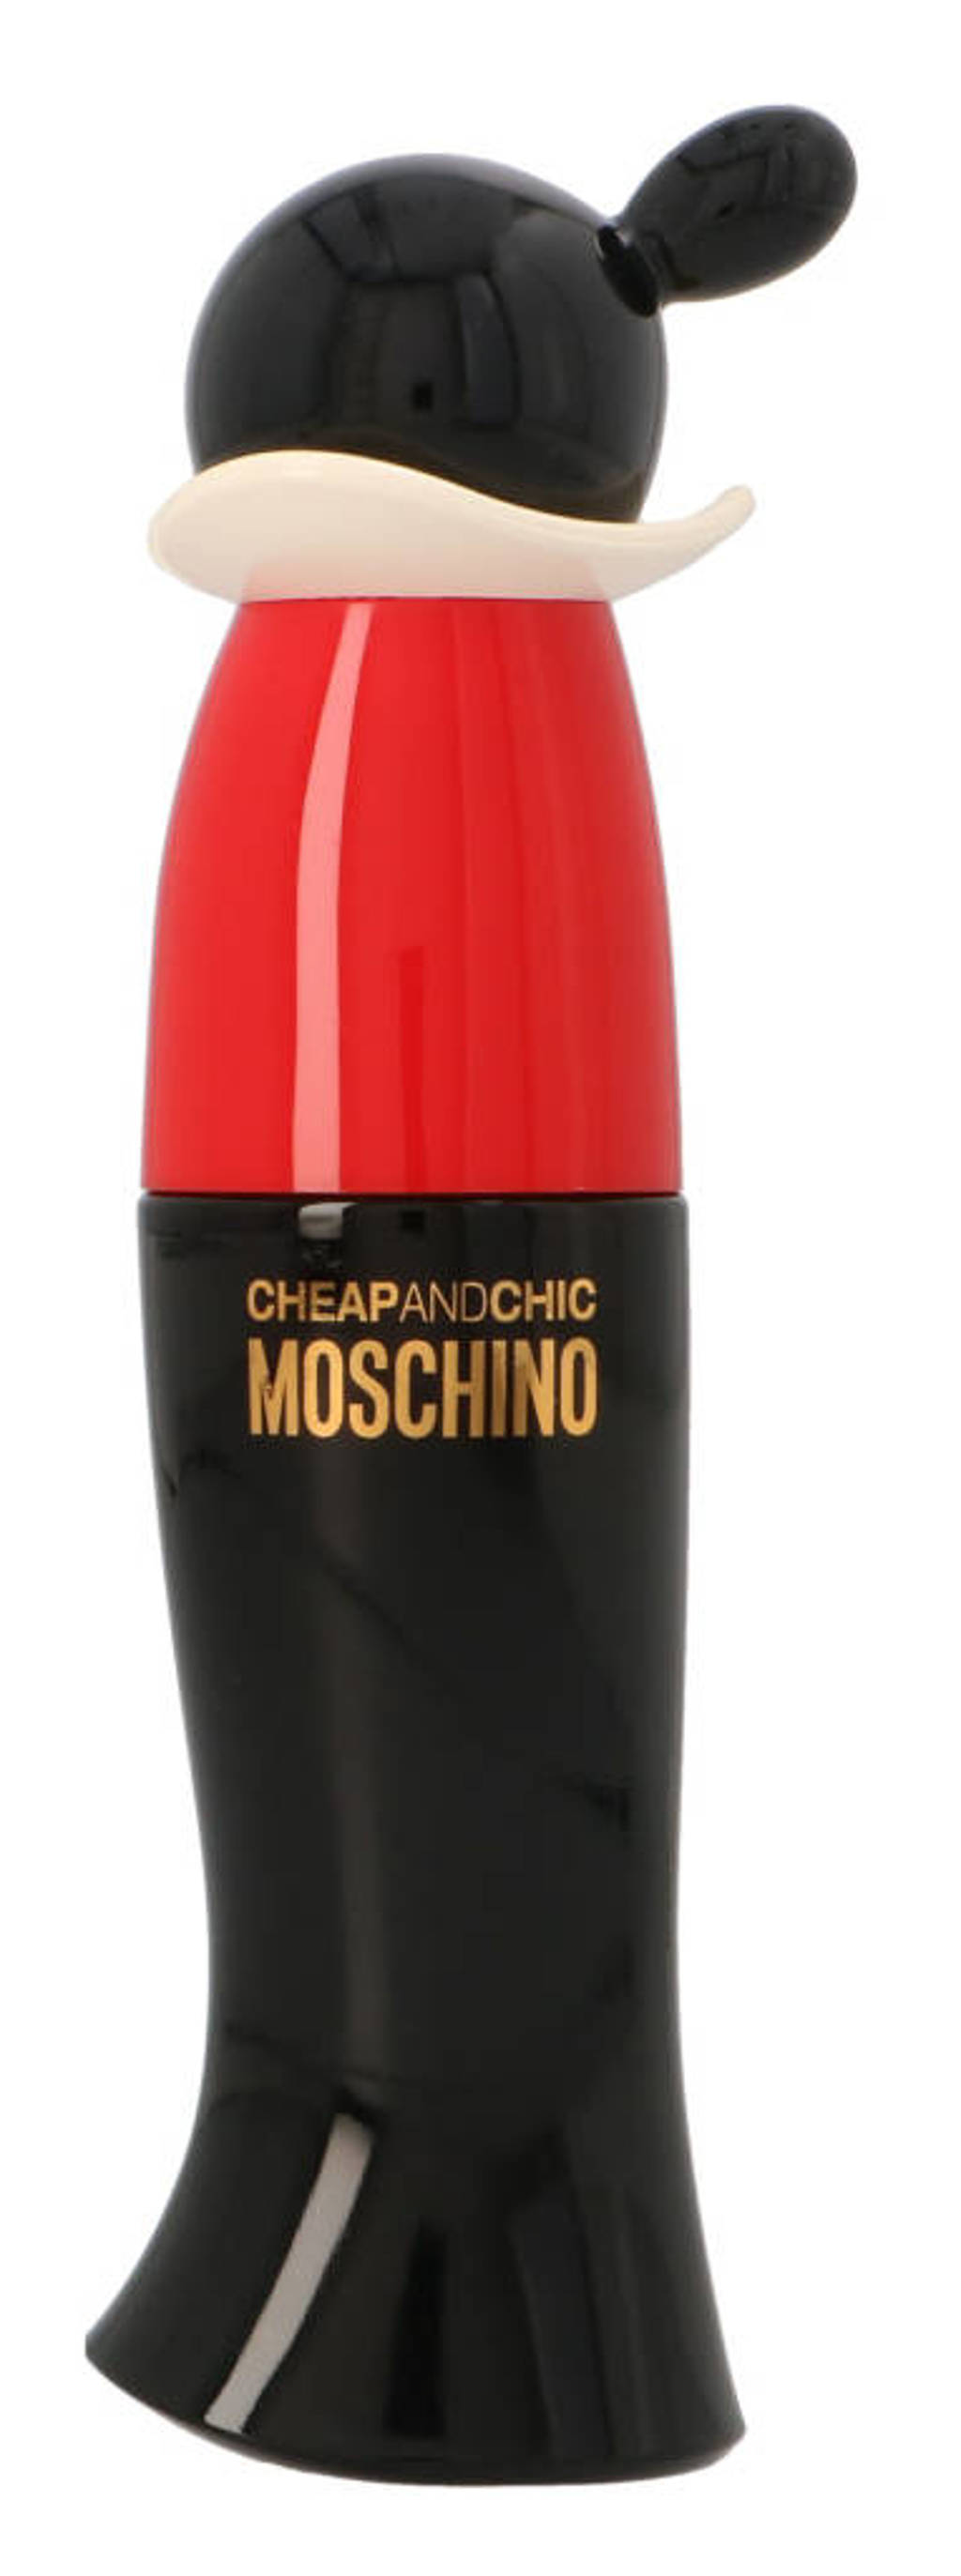 Moschino Cheap & Chic eau de toilette - 30 ml